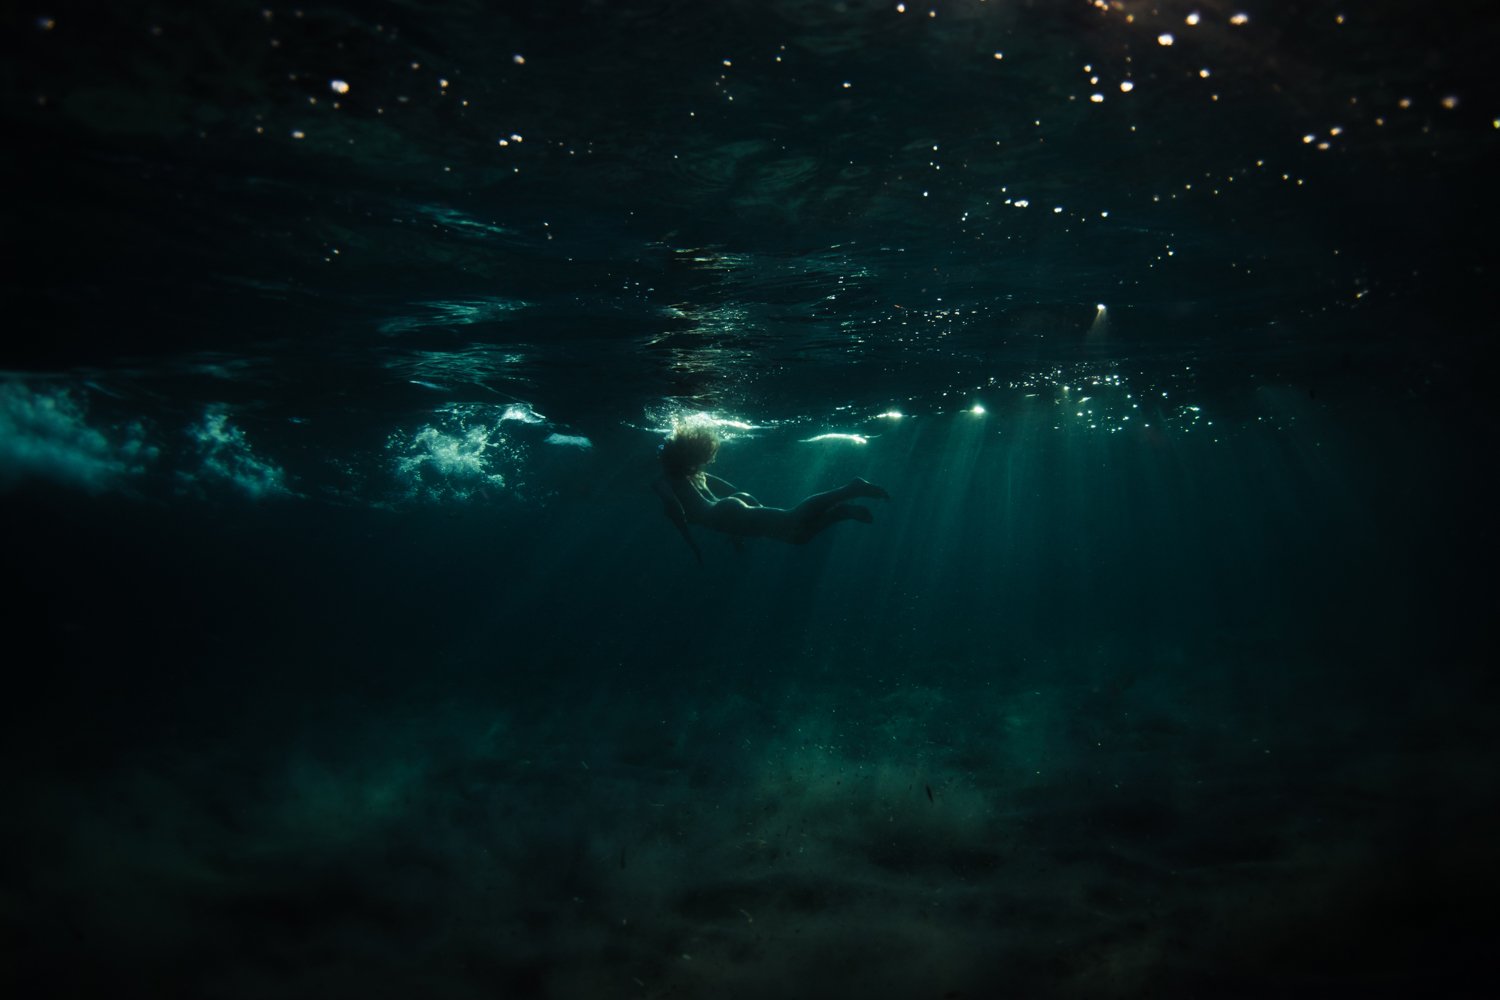 underwater corse corsica sea mediterranean island france french photographer photographe ajaccio Krista Espino Capo di feno wave nude nue femme woman fine art photography-71.jpg